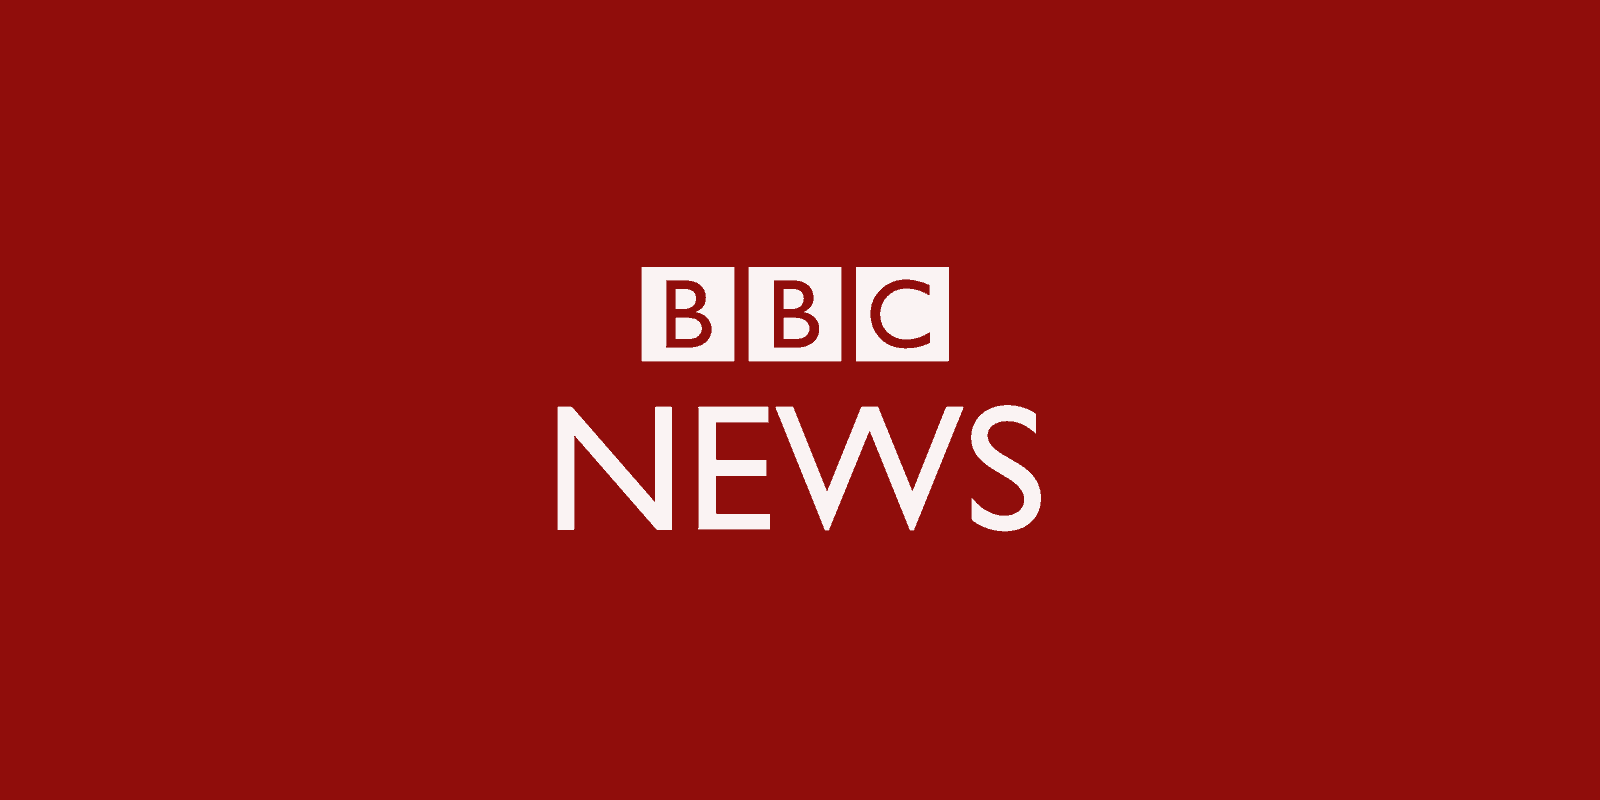 BBC Essex News: Essex: Man dies after police restraint in Brentwood, inquest told